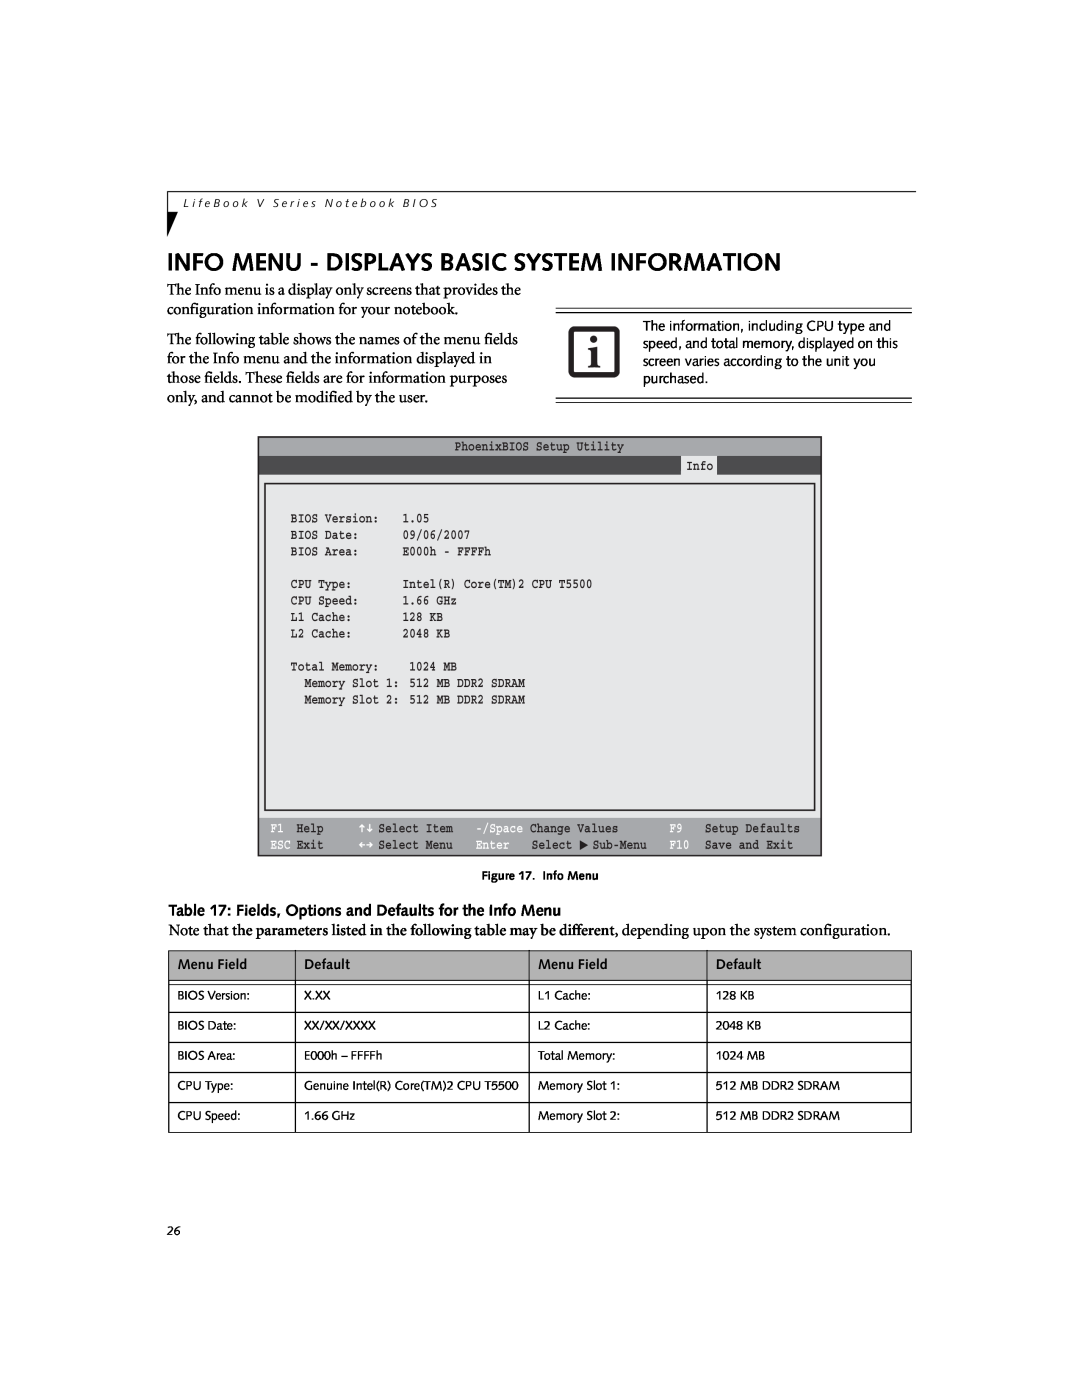 Fujitsu V1010 manual Info Menu - Displays Basic System Information, Fields, Options and Defaults for the Info Menu 